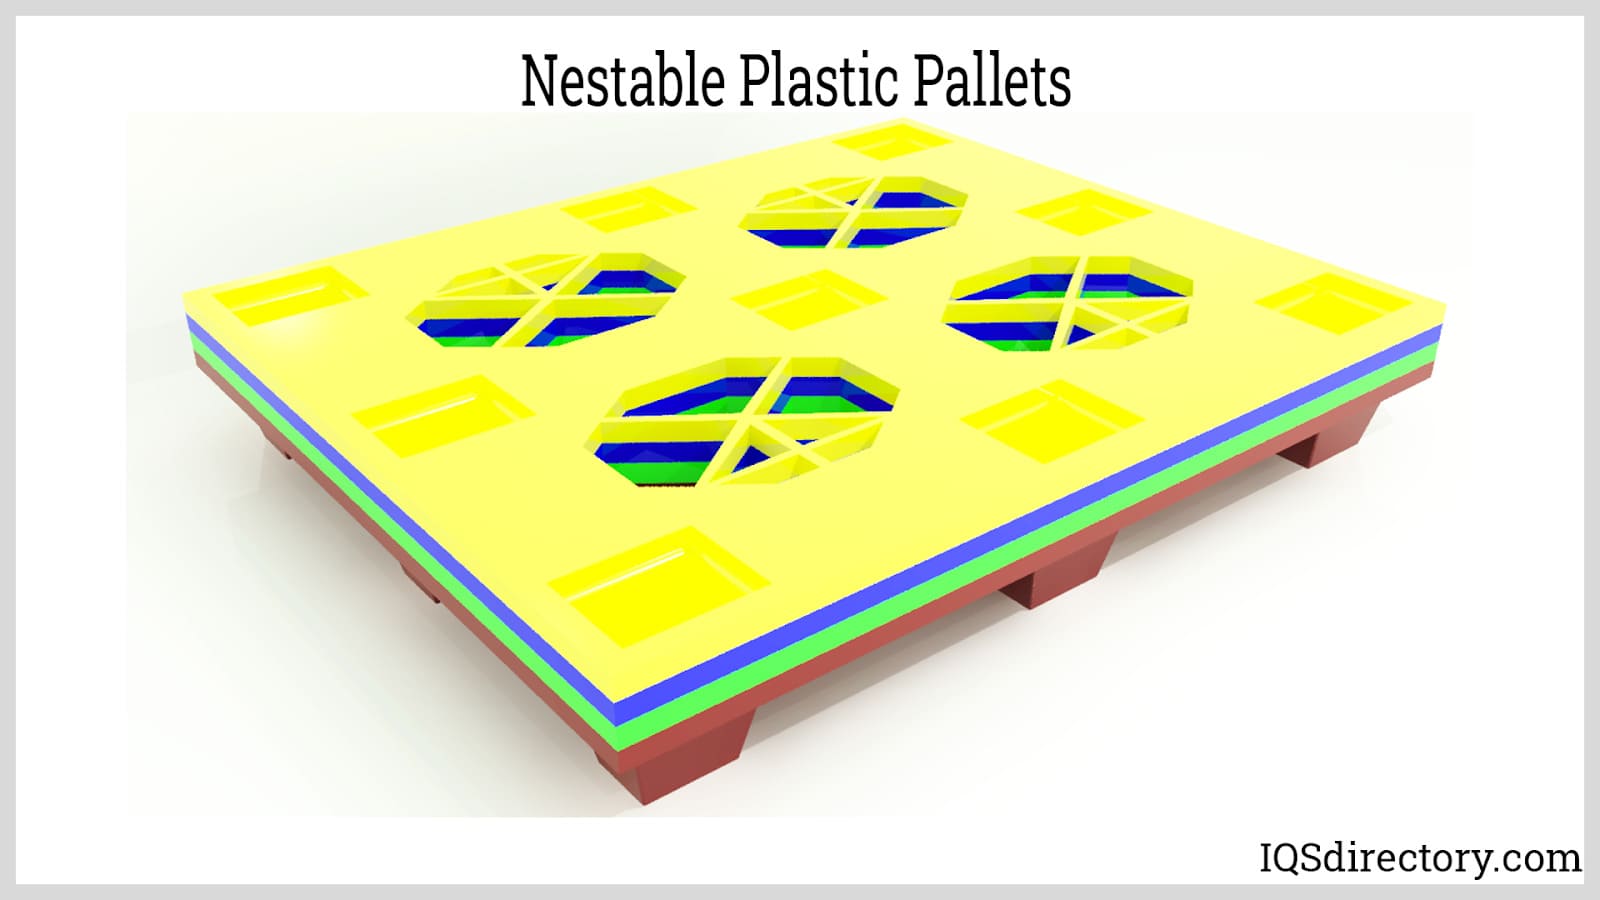 Nestable Plastic Pallets